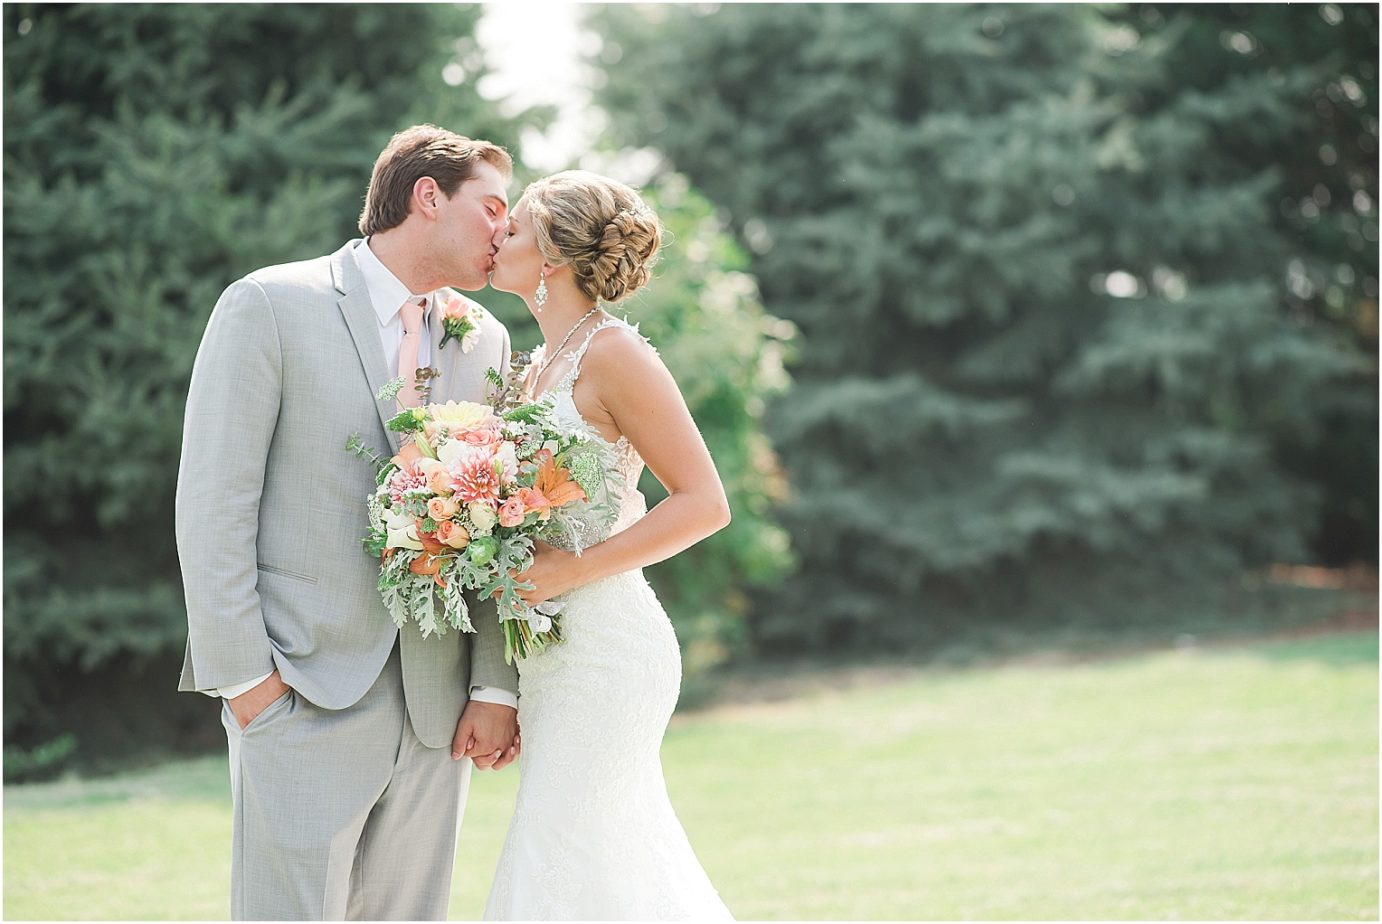 Romantic backyard wedding othello photographer Alix and Kylee bride and groom portraits